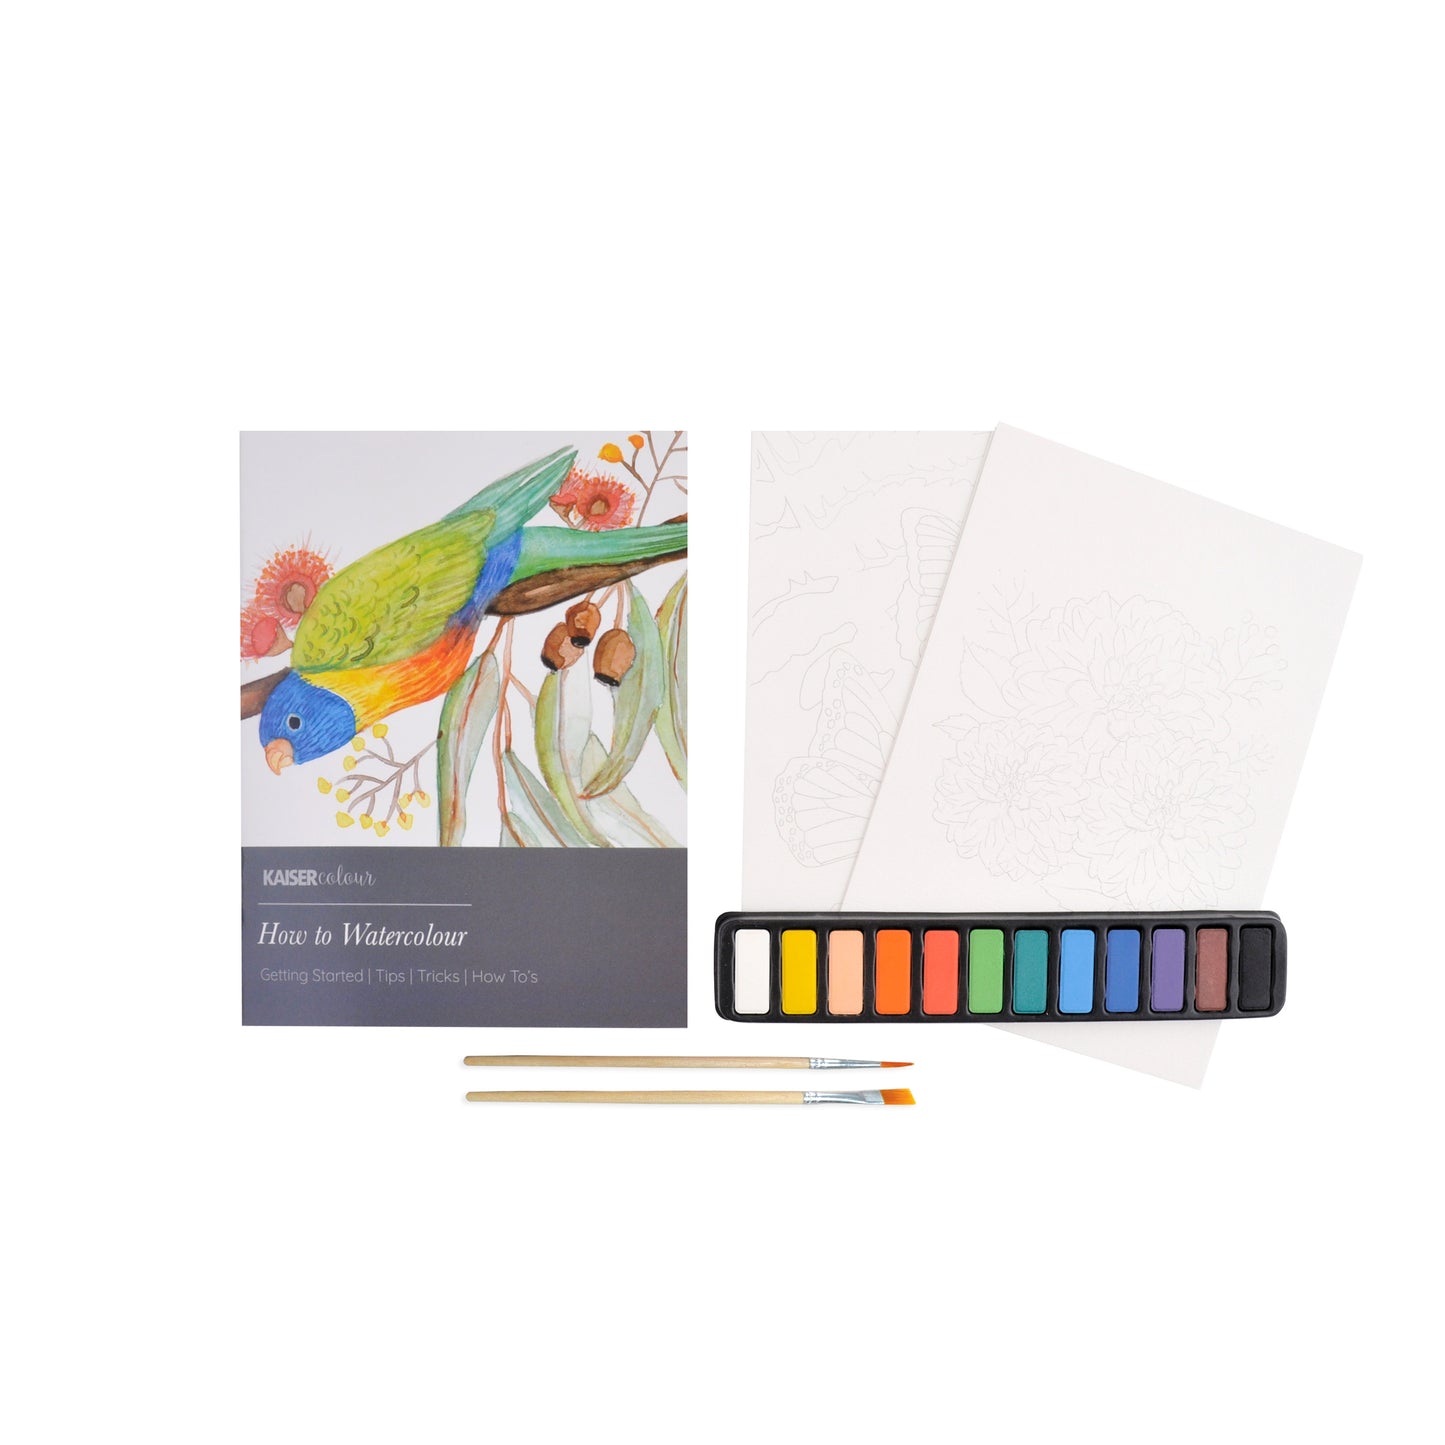 How to Watercolour Kit